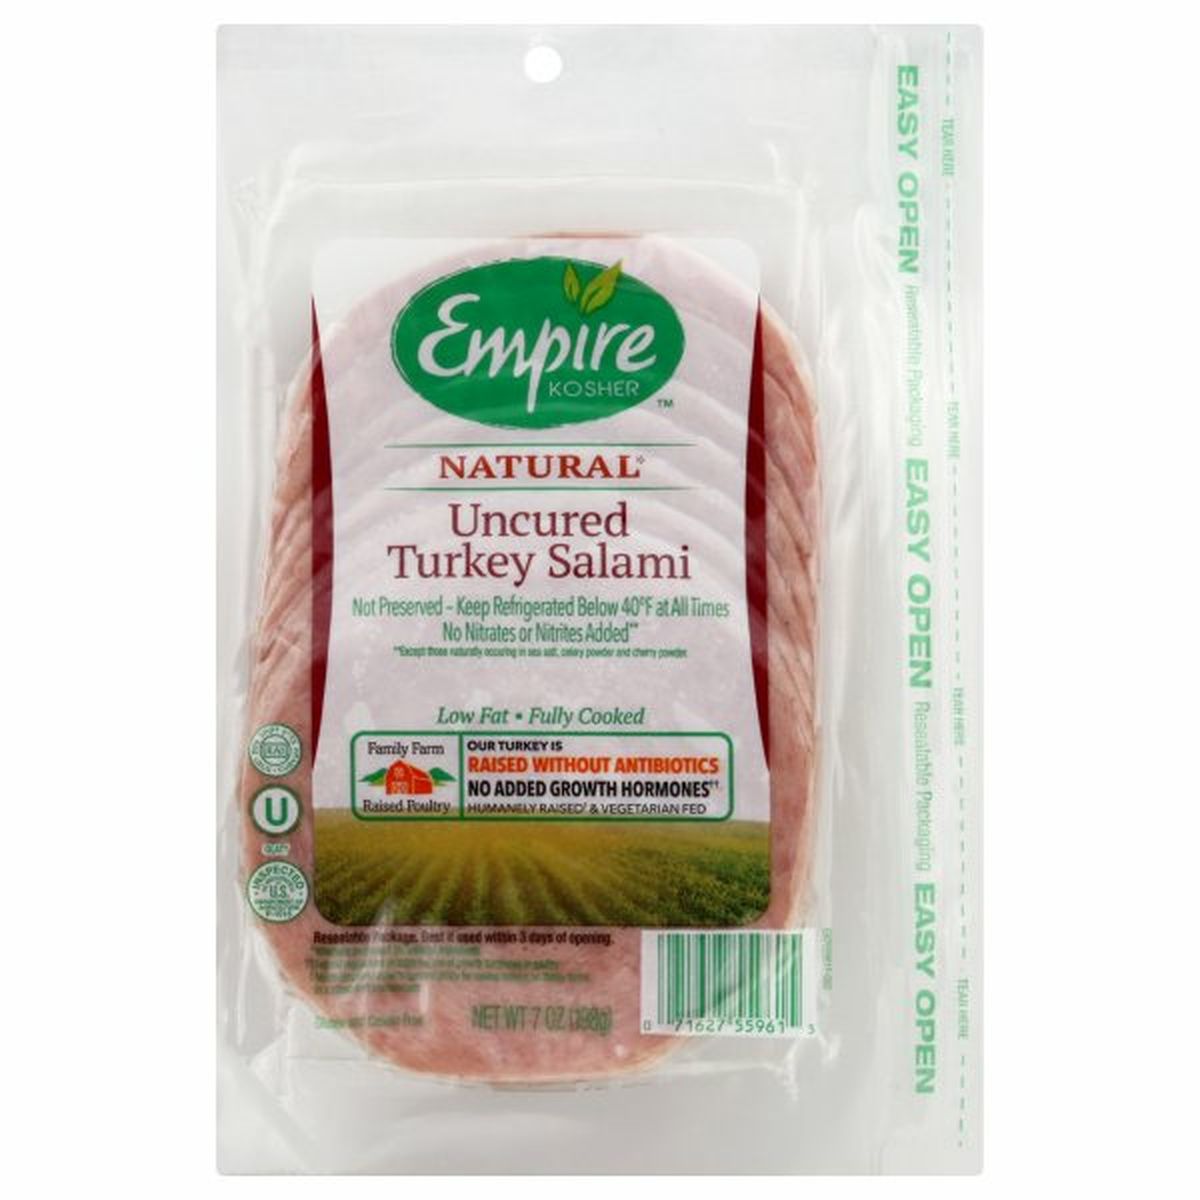 Calories in Empire Kosher Turkey Salami, Uncured